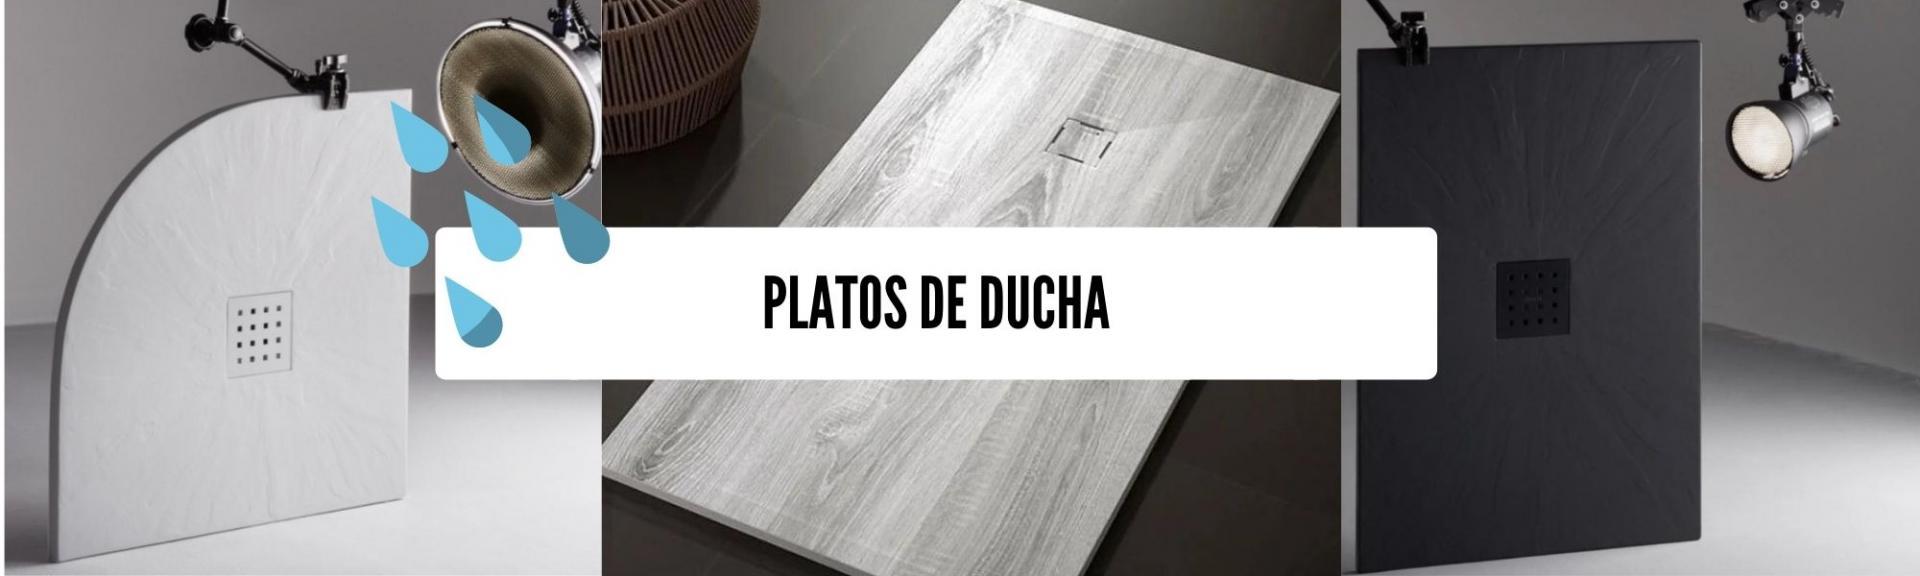 Platos de Ducha DESIGN - Comprar Platos de Ducha.